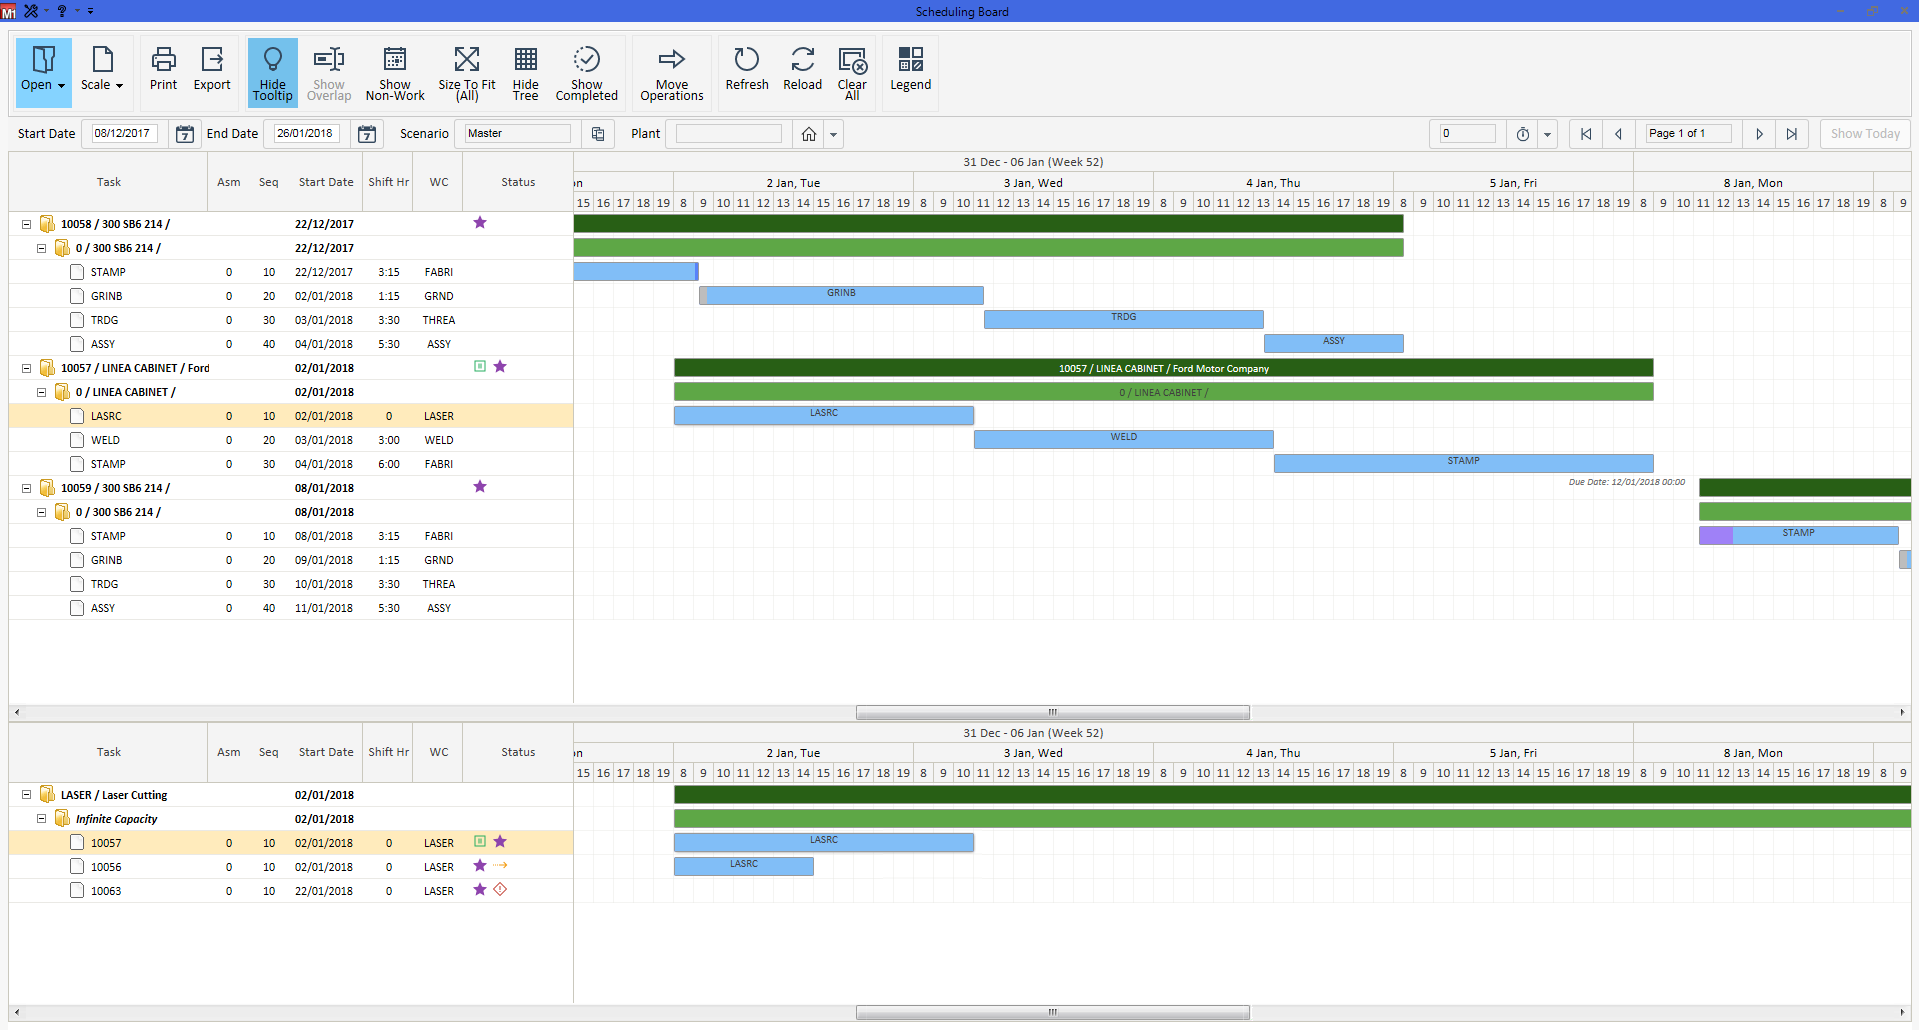 M1 ERP Software - Scheduling board